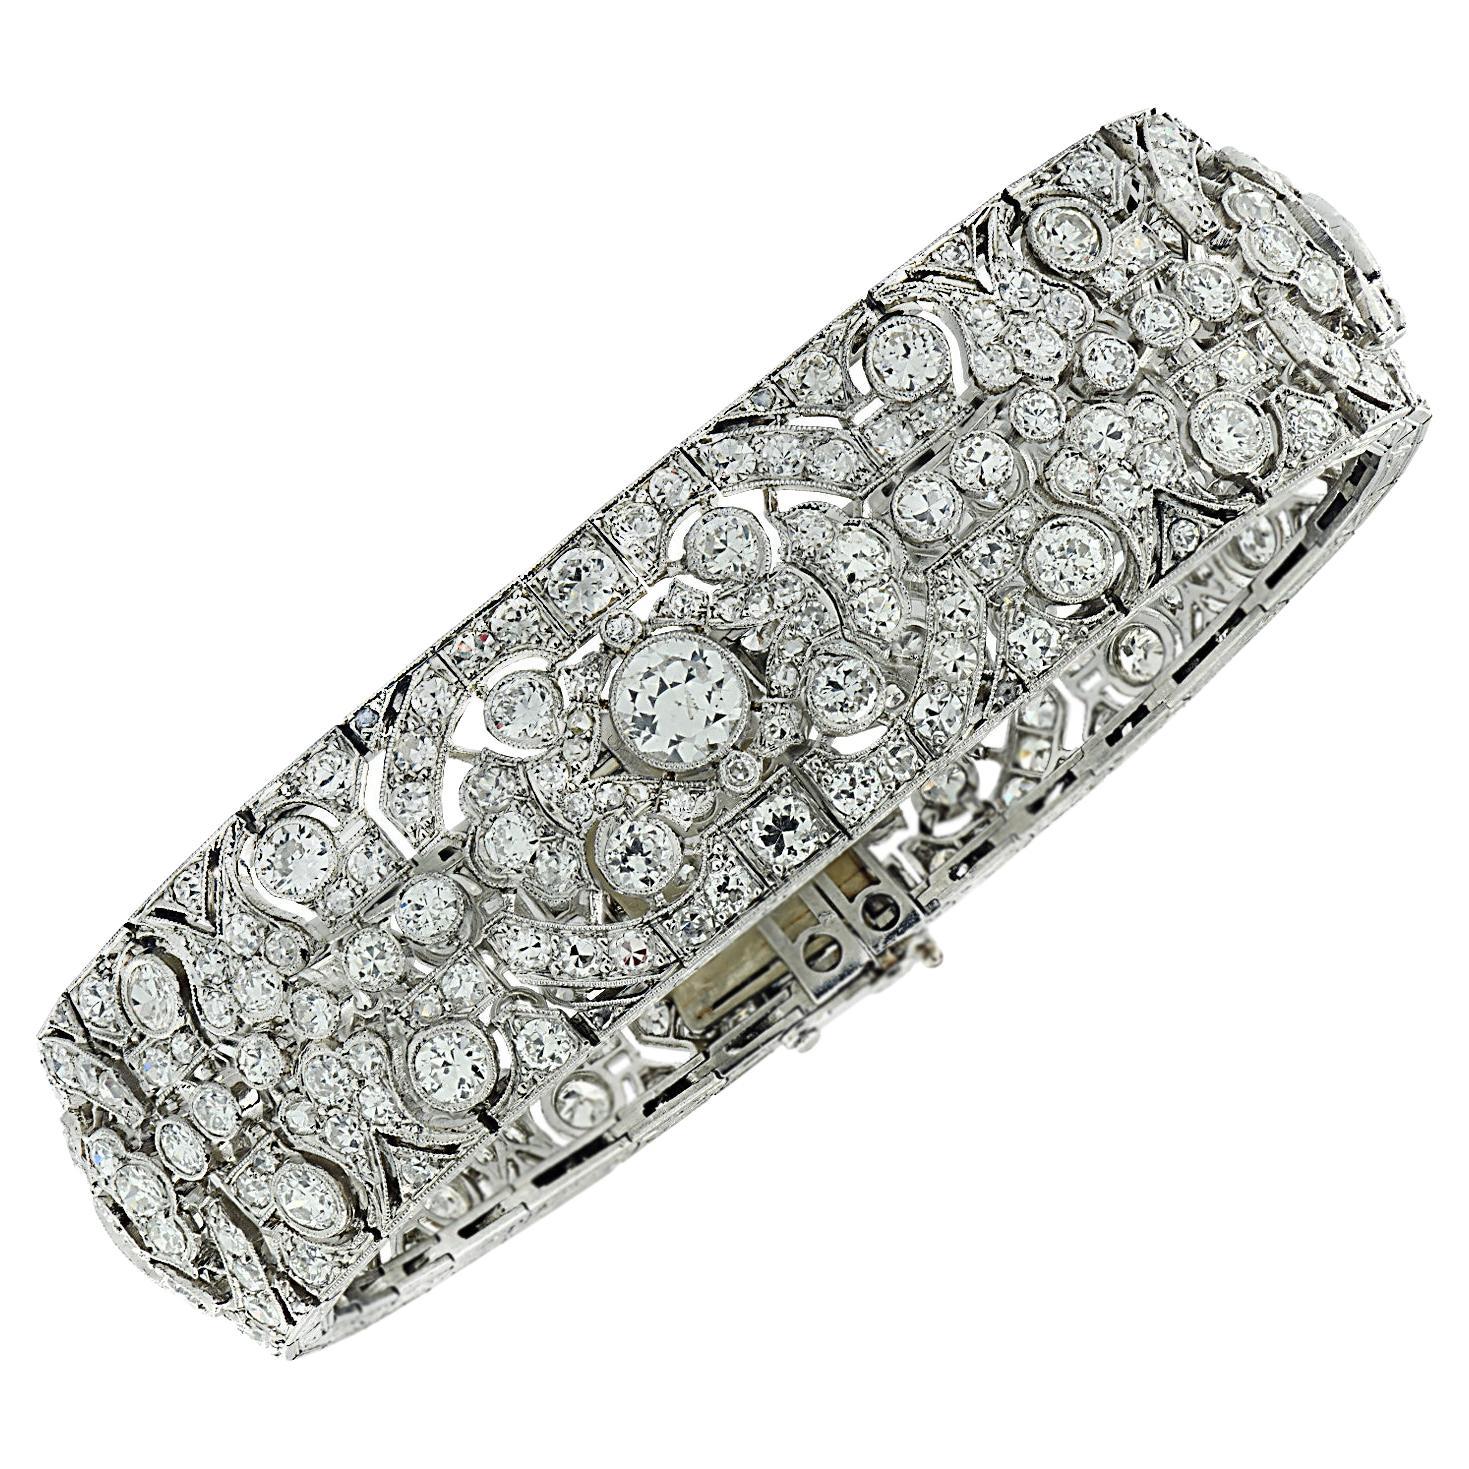 Art Deco 20.00 Carat Diamond Bracelet, circa 1920s